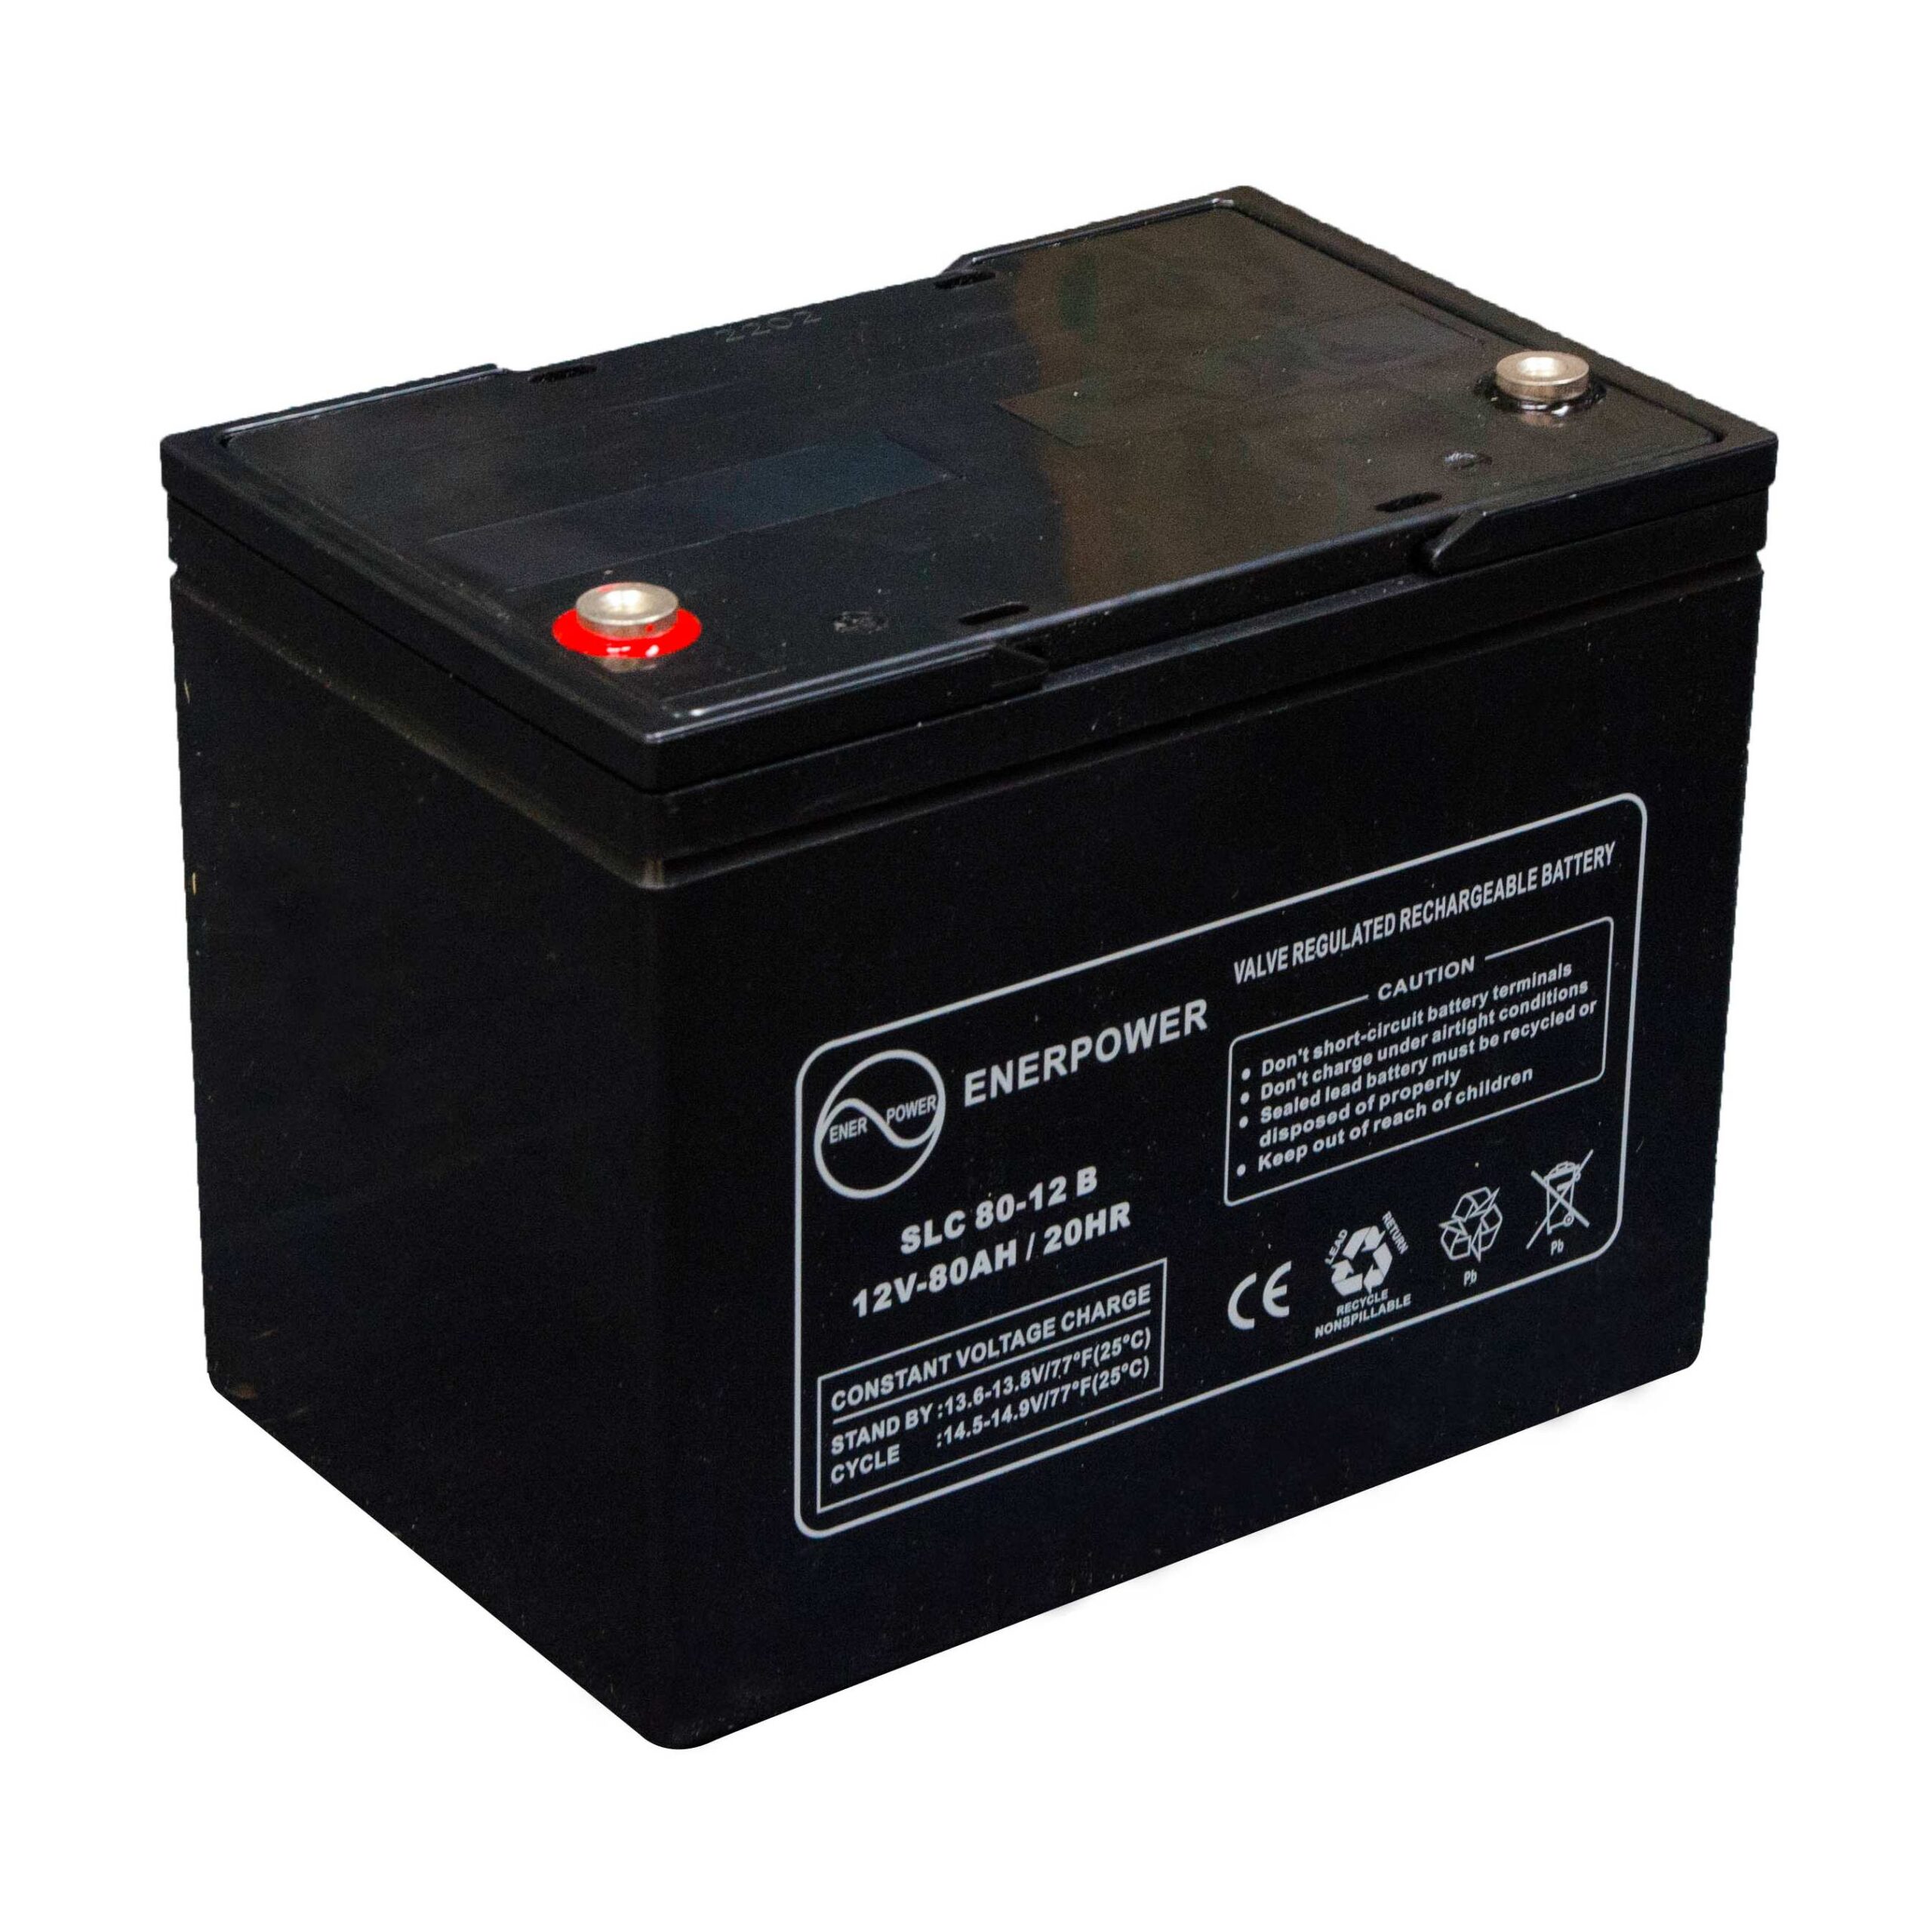 SLC80-12 12V 80Ah AGM ENERPOWER battery